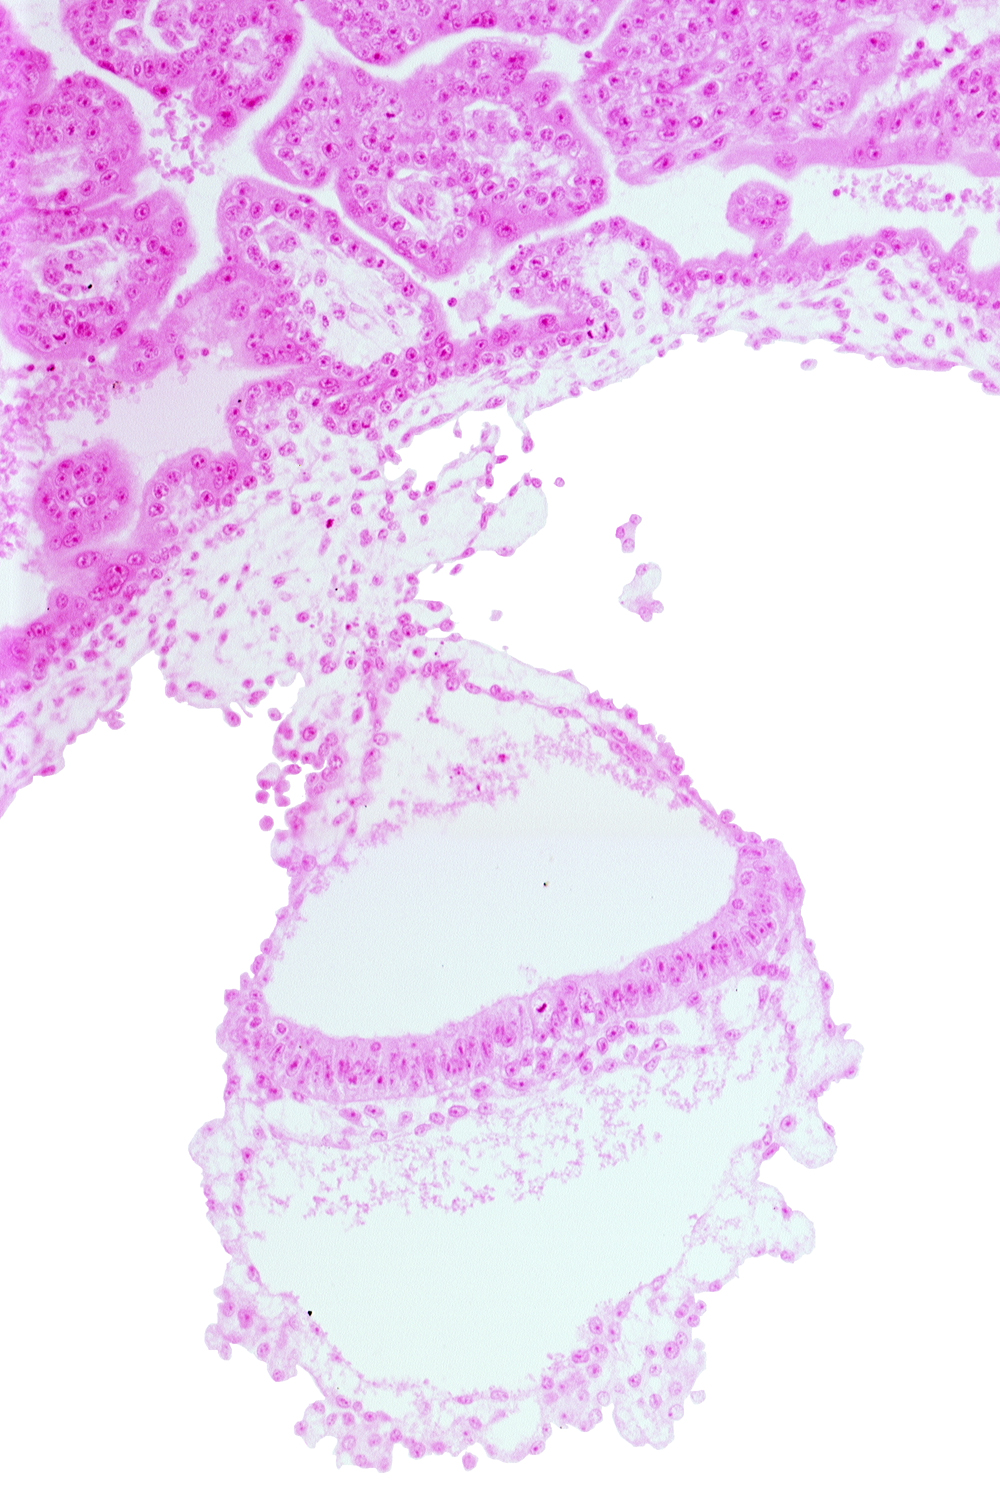 amniotic mesenchyme, connecting stalk, gastrulation (primitive) node, head mesenchyme, lateral edge of embryonic disc, mesothelium